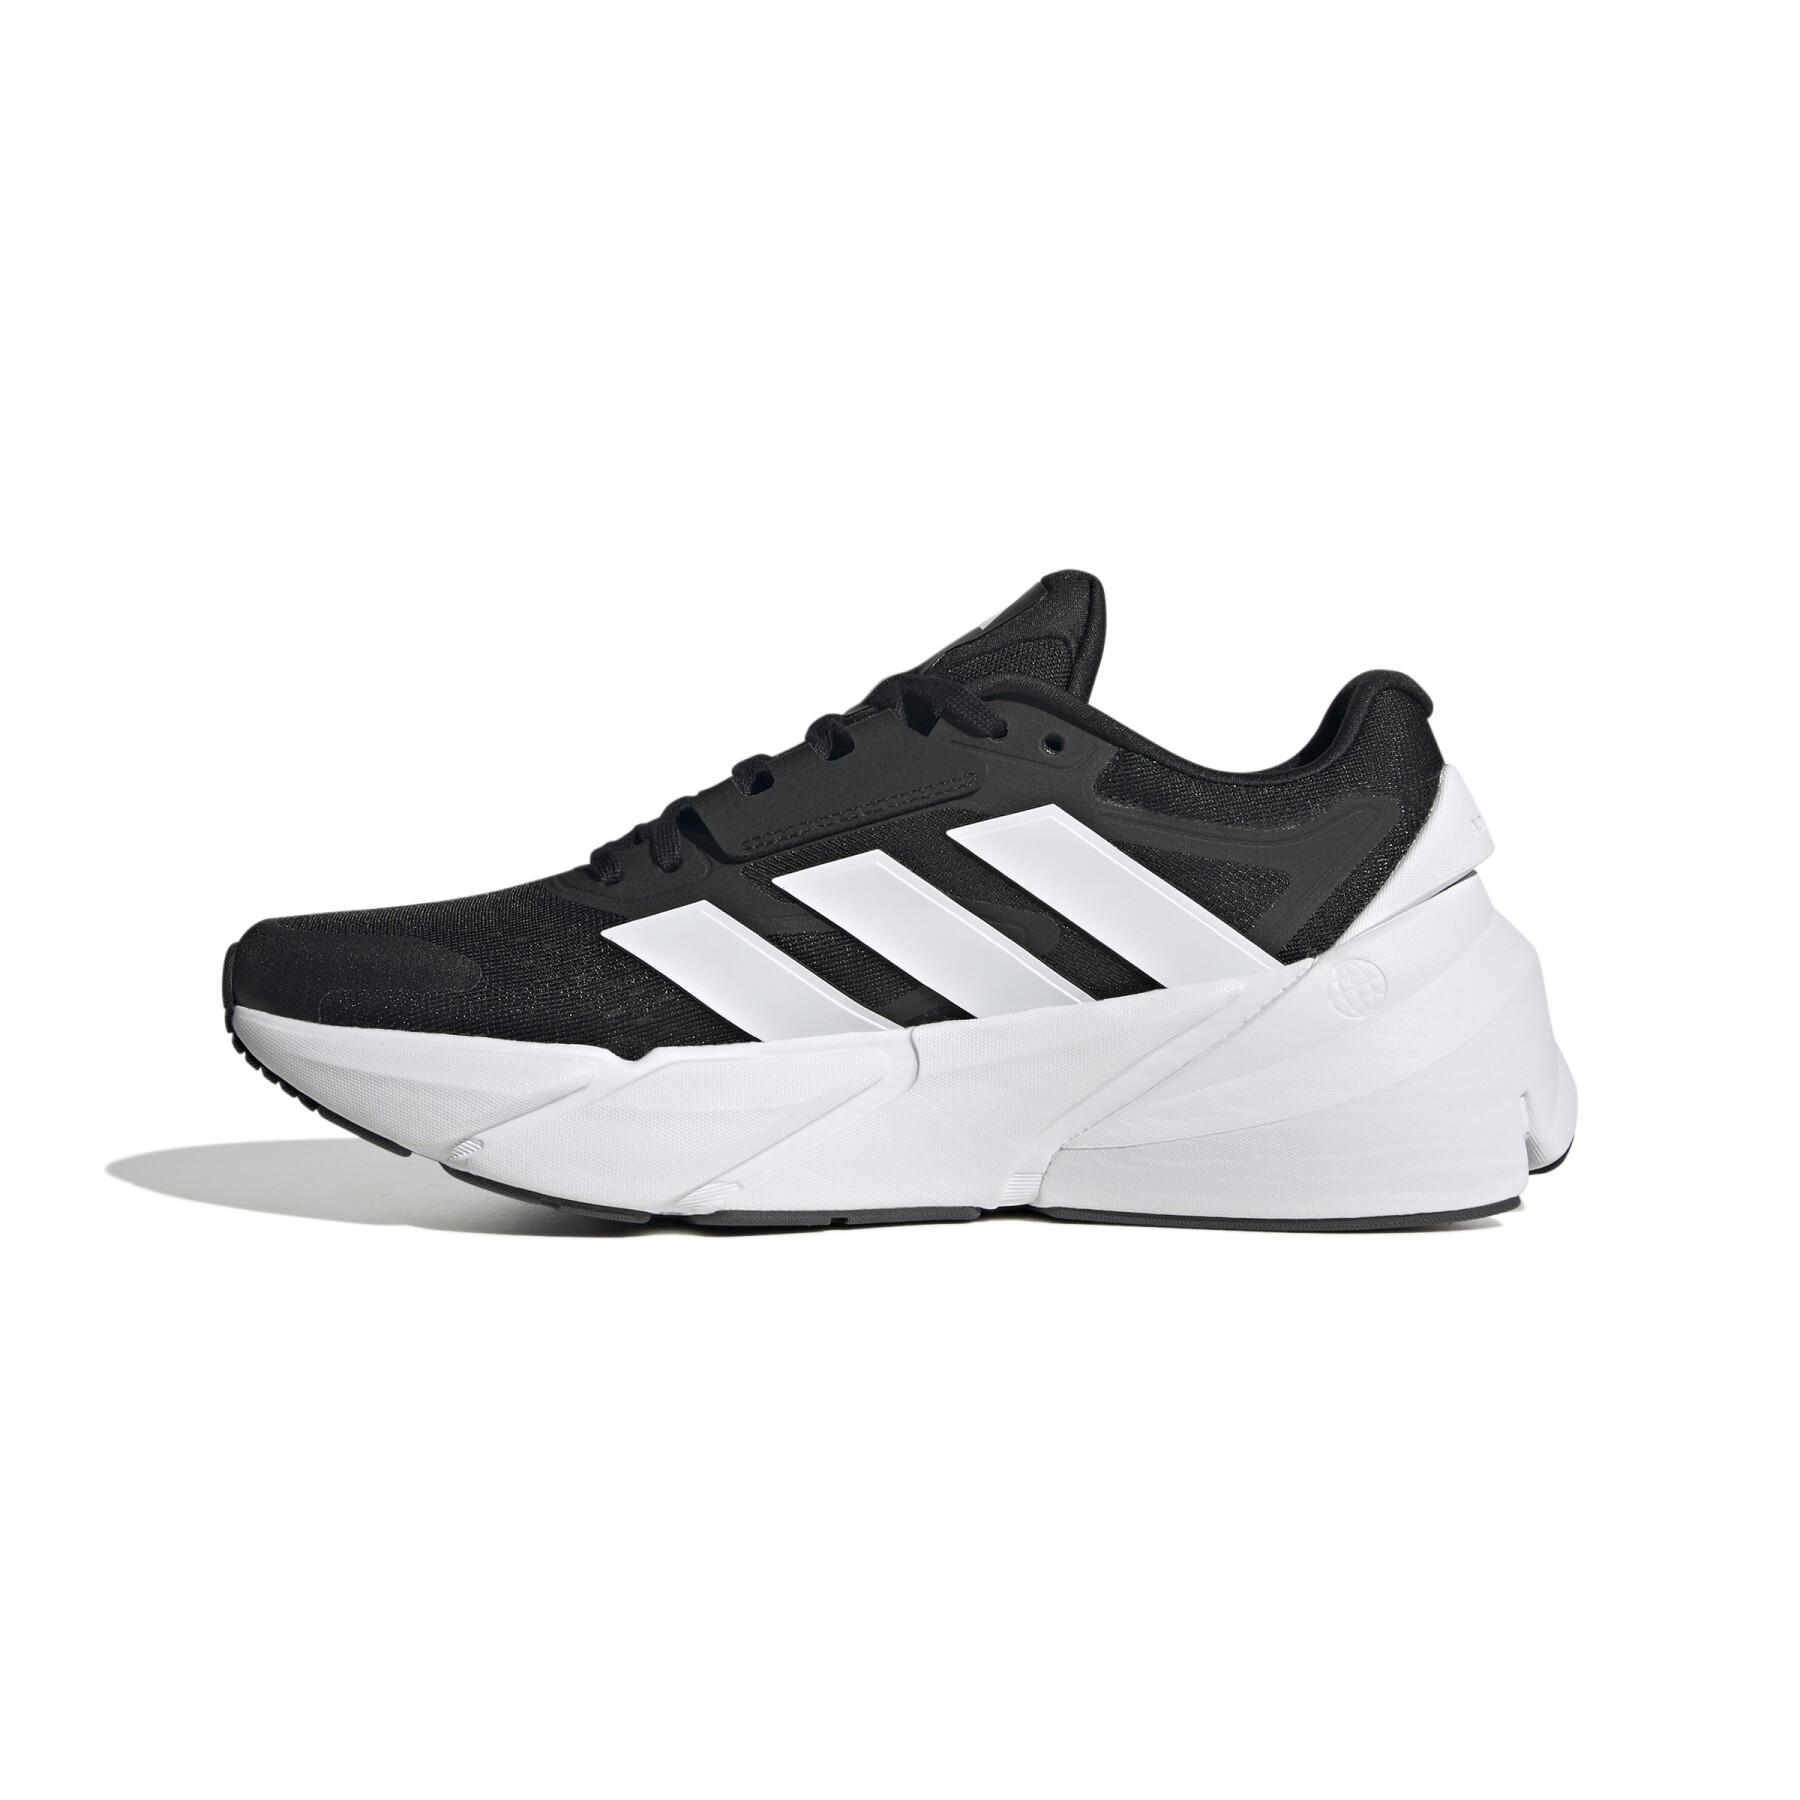 Shoe from running adidas Adistar 2.0